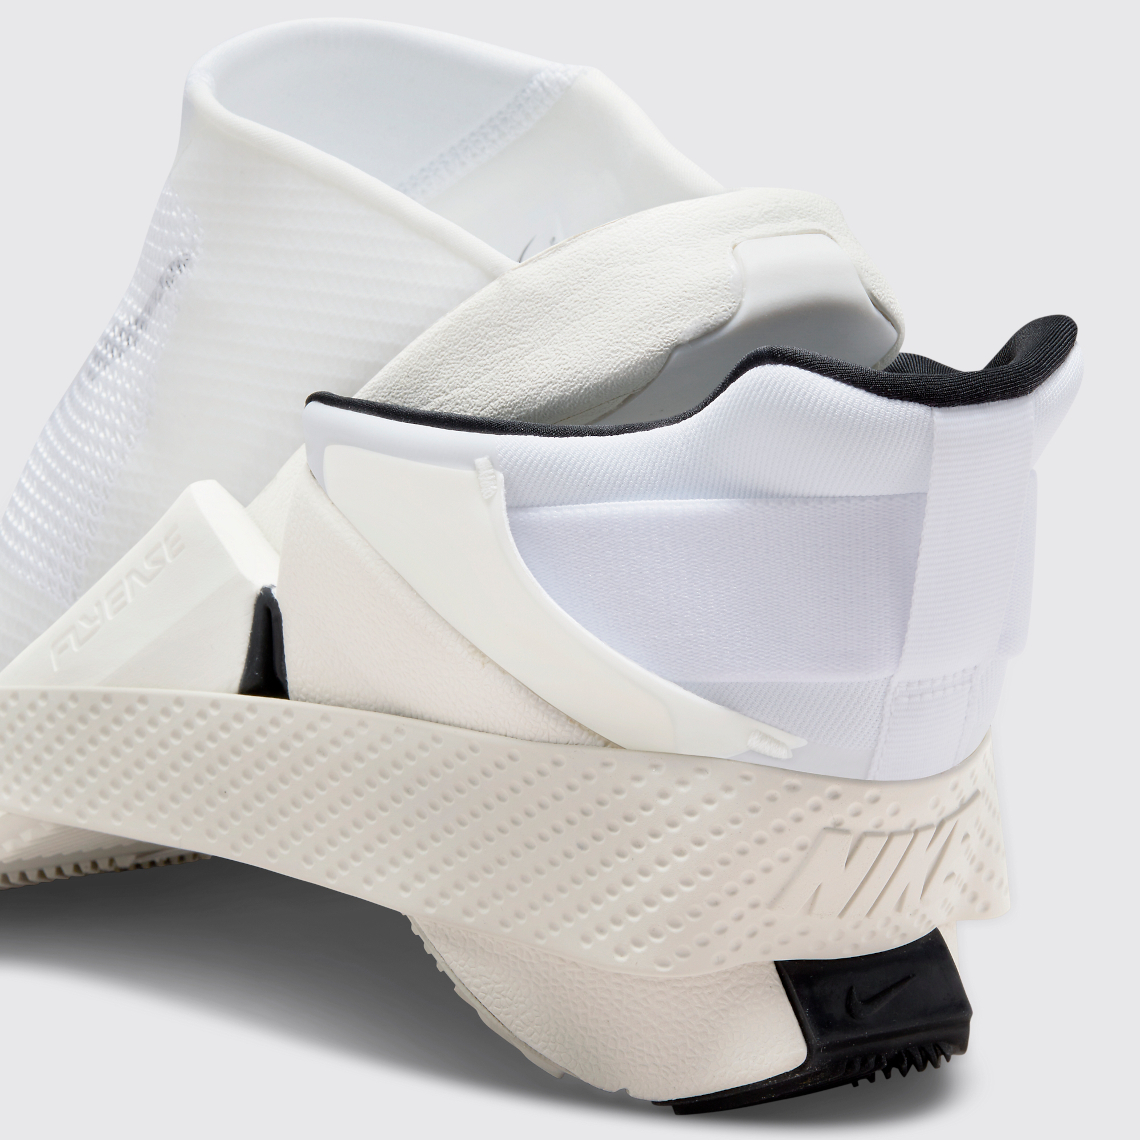 Nike Go FlyEase go fly easy nike "White/Sail" CW5883-101 Release | SneakerNews.com